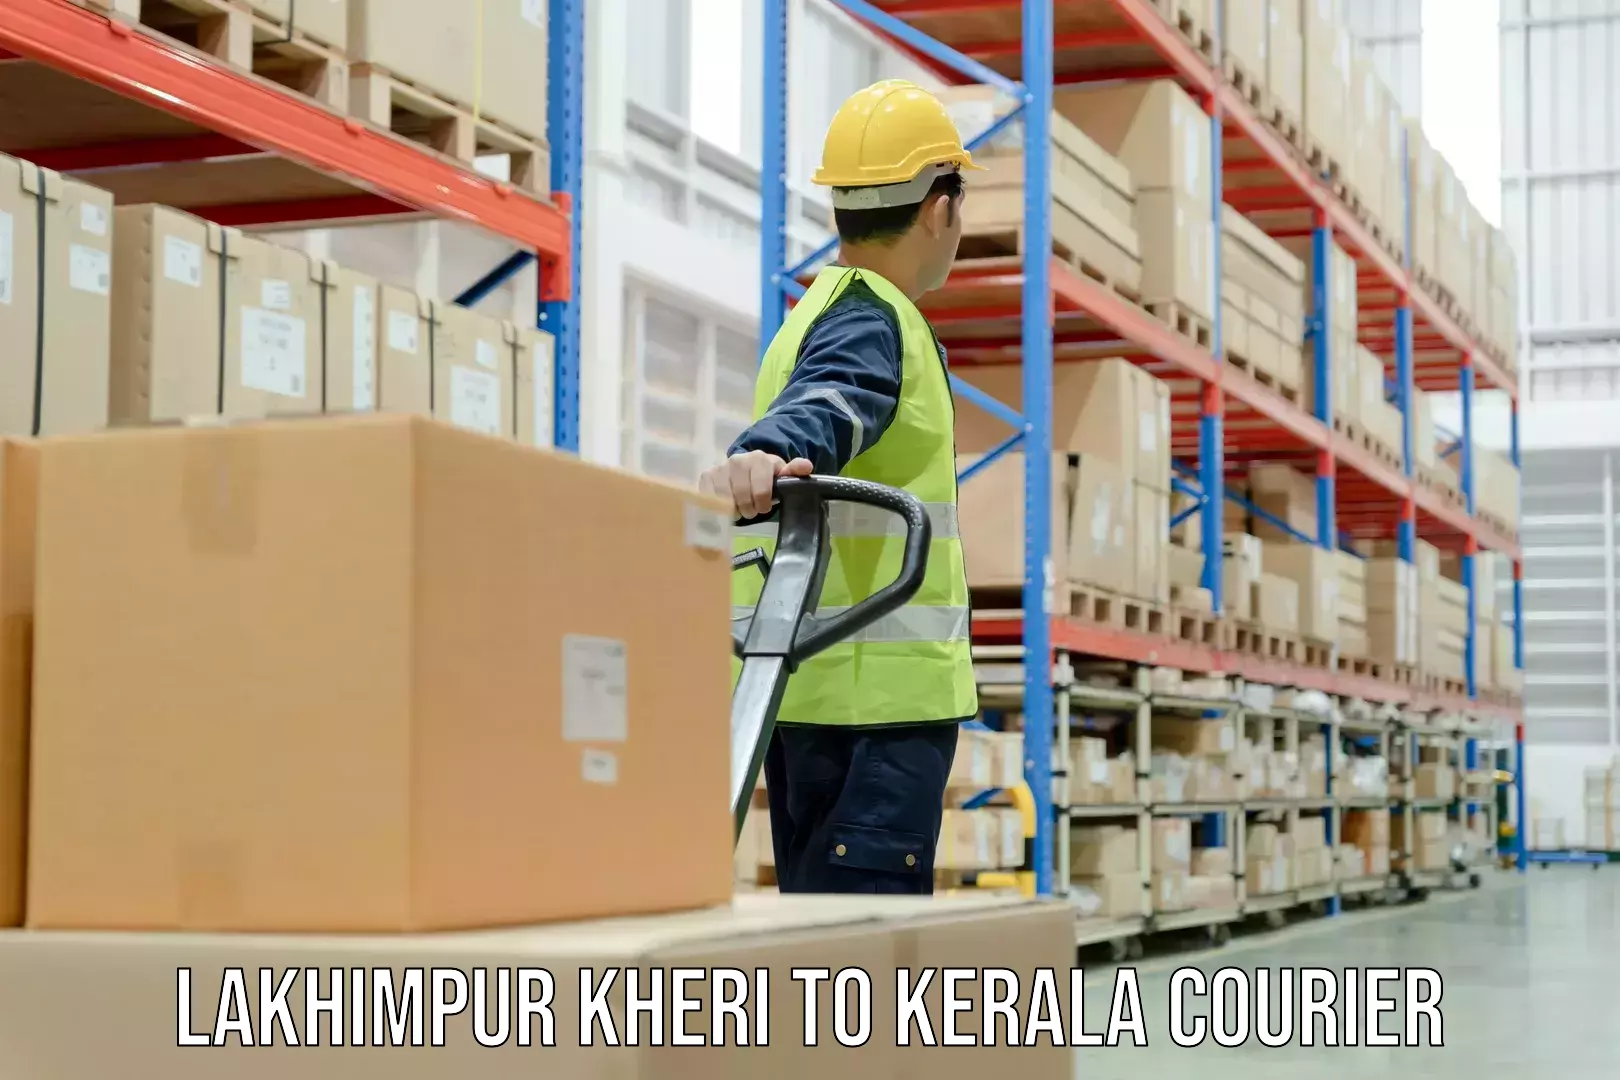 User-friendly courier app Lakhimpur Kheri to Kerala